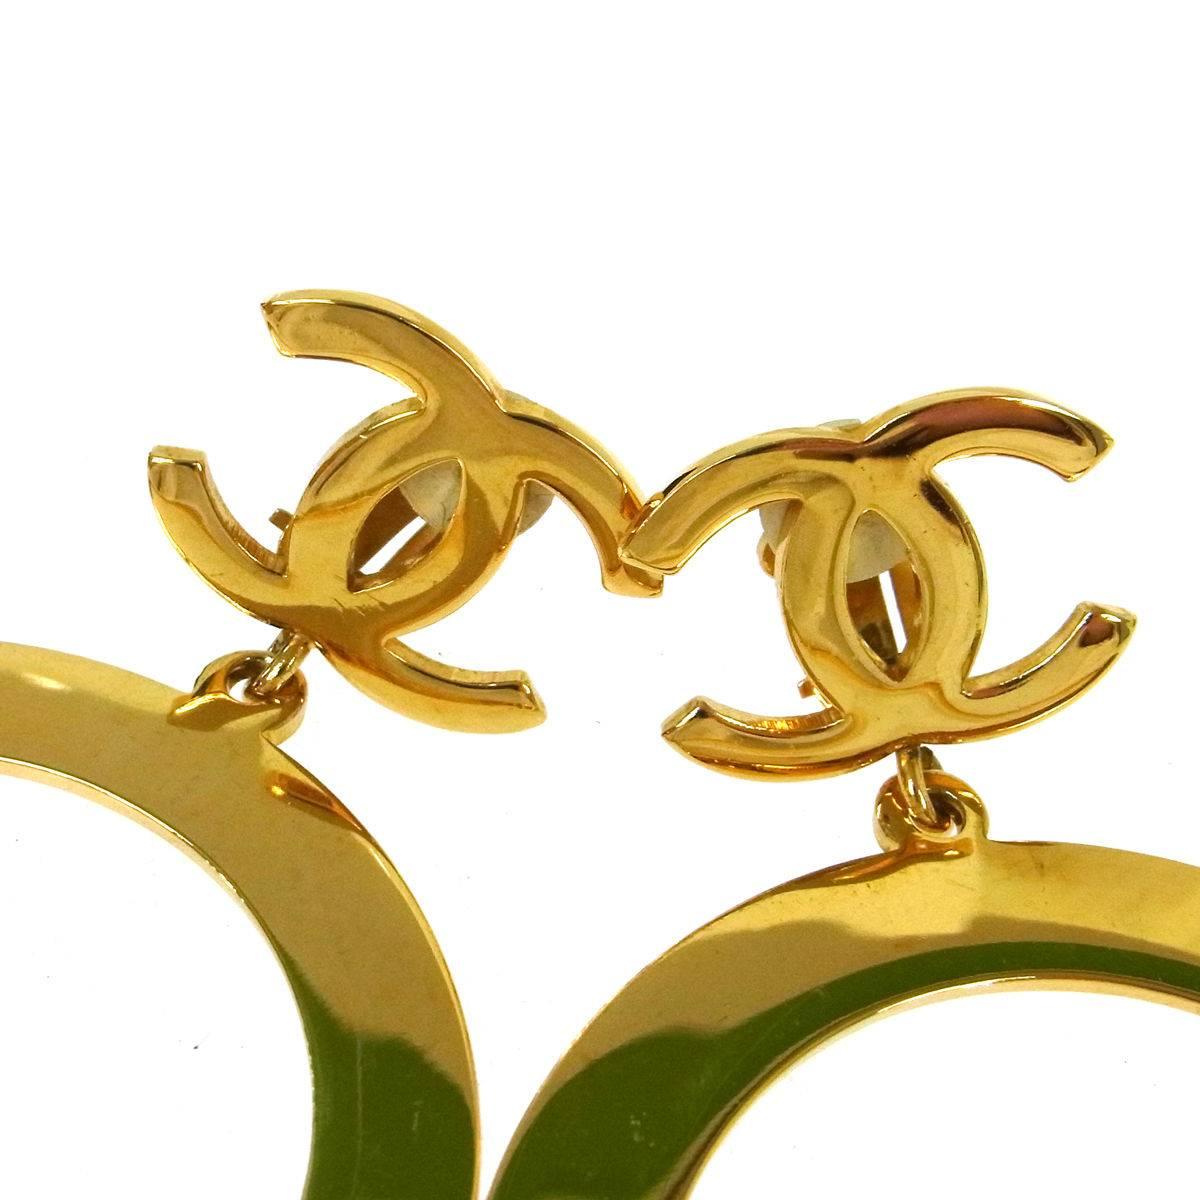 Chanel Rare Vintage Gold Charm Oversize Large Doorknocker Drape Drop Evening Earrings

Metal
Gold tone
Clip on closure
Width 2.5